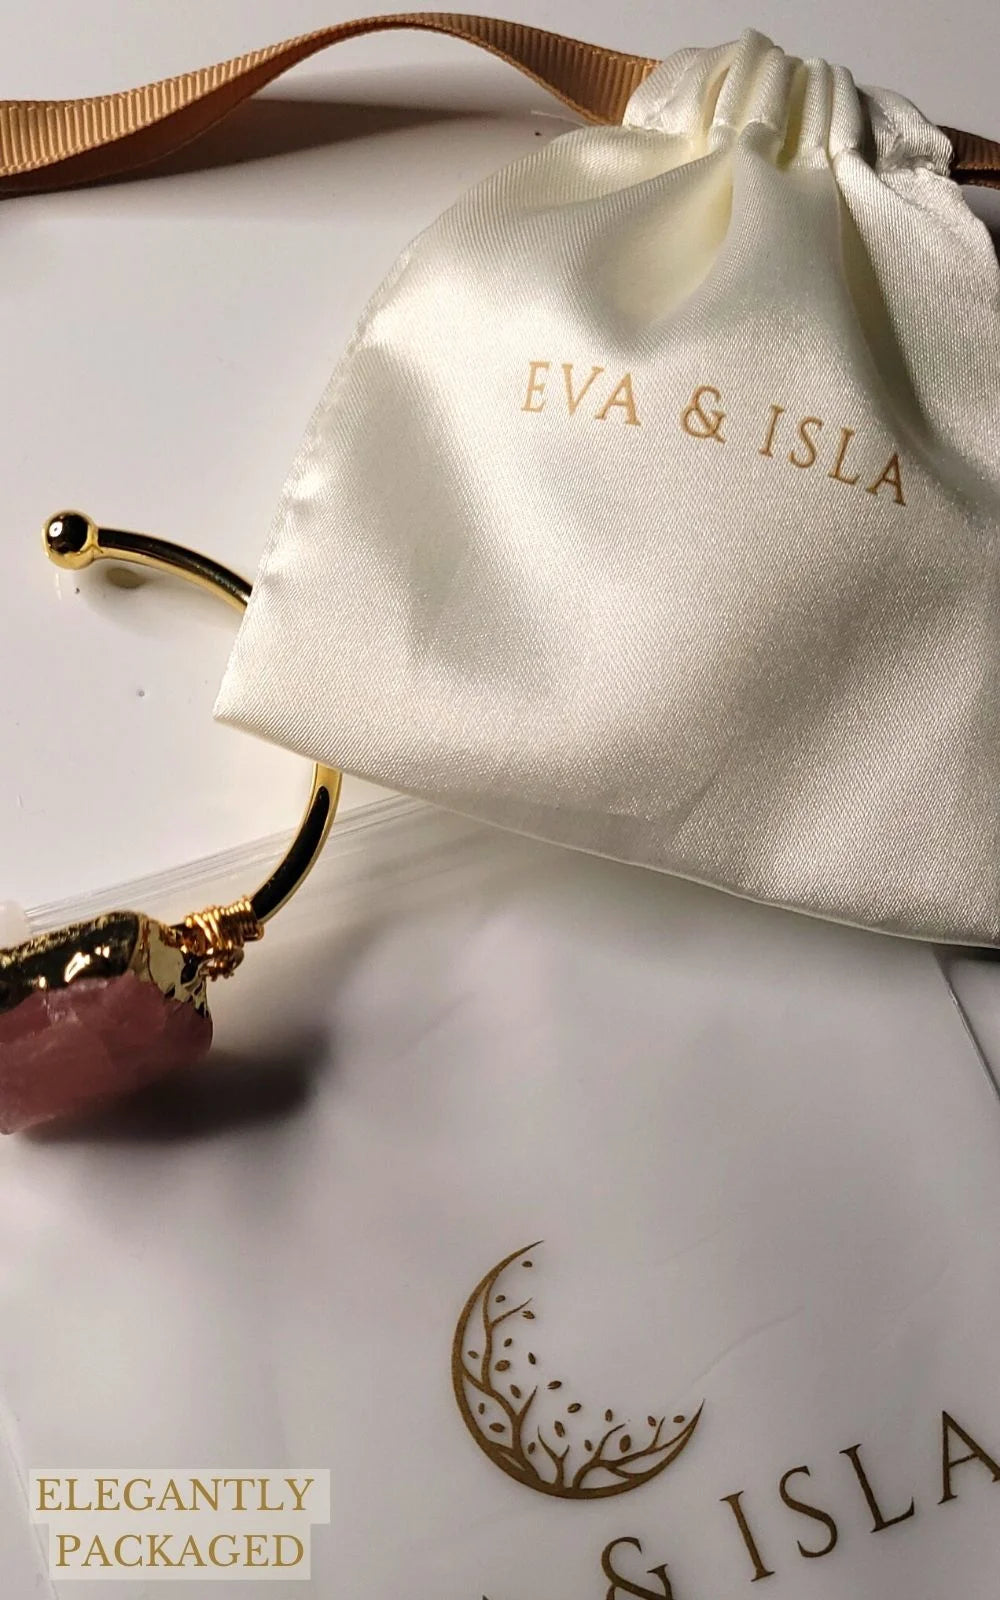 Eva & Isla Womens 18k Gold Plated Madagascar Rose Quartz Cuff Bracelet Bangle